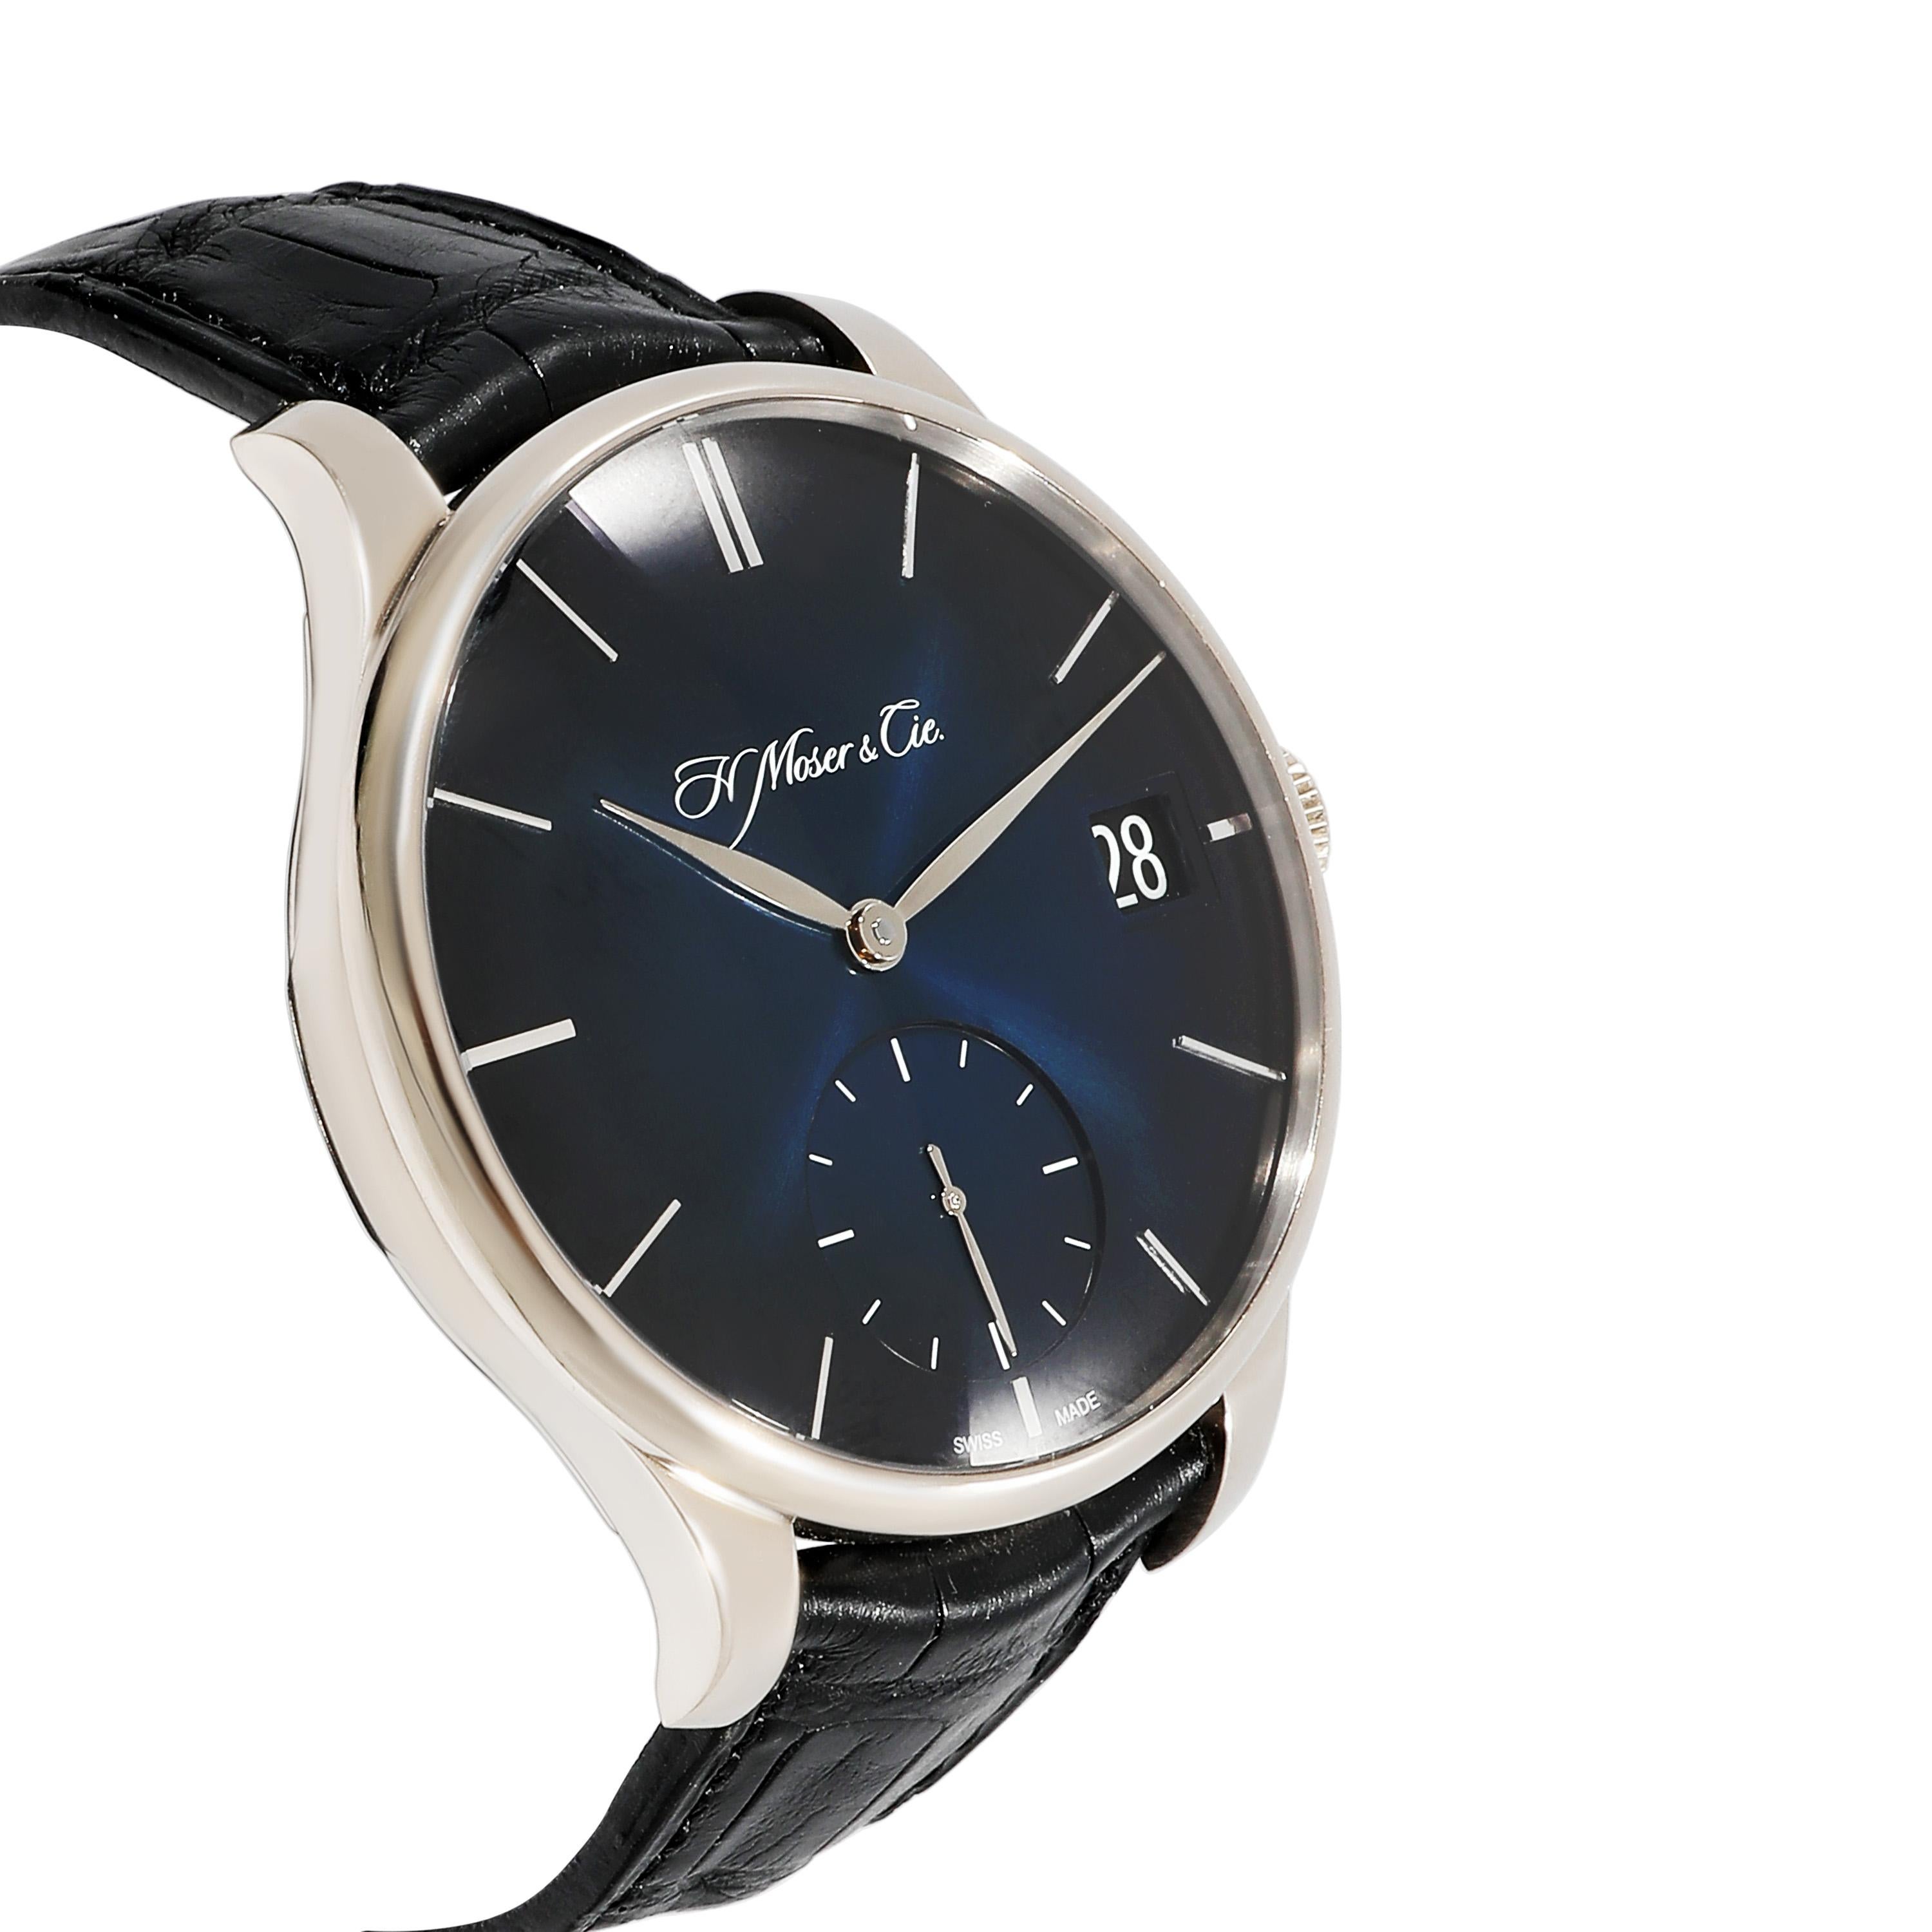 H. Moser & Cie. Venturer Big Date 2100-0202 Men's Watch in 18kt White Gold For Sale 1